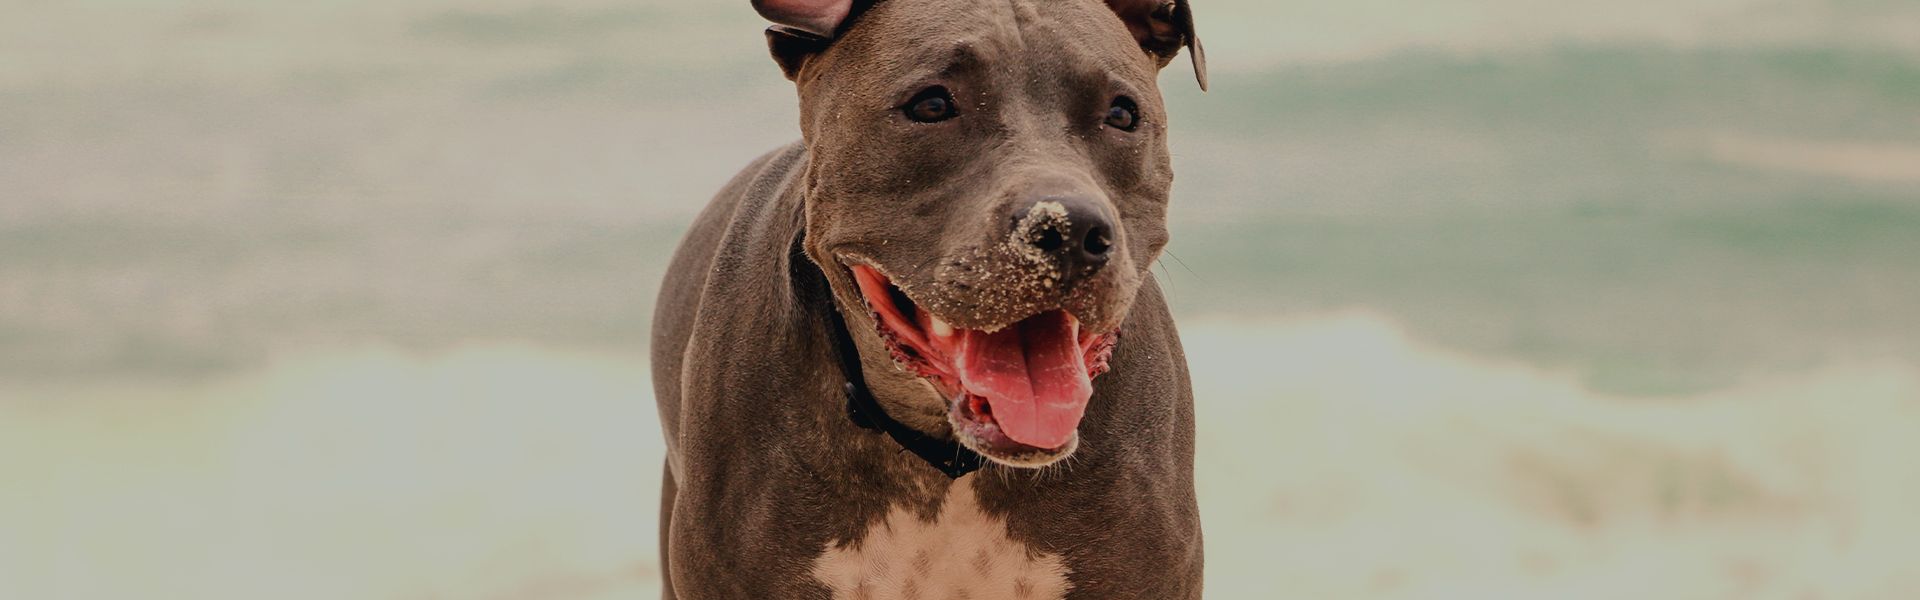 smiling pitbull dog at the beach